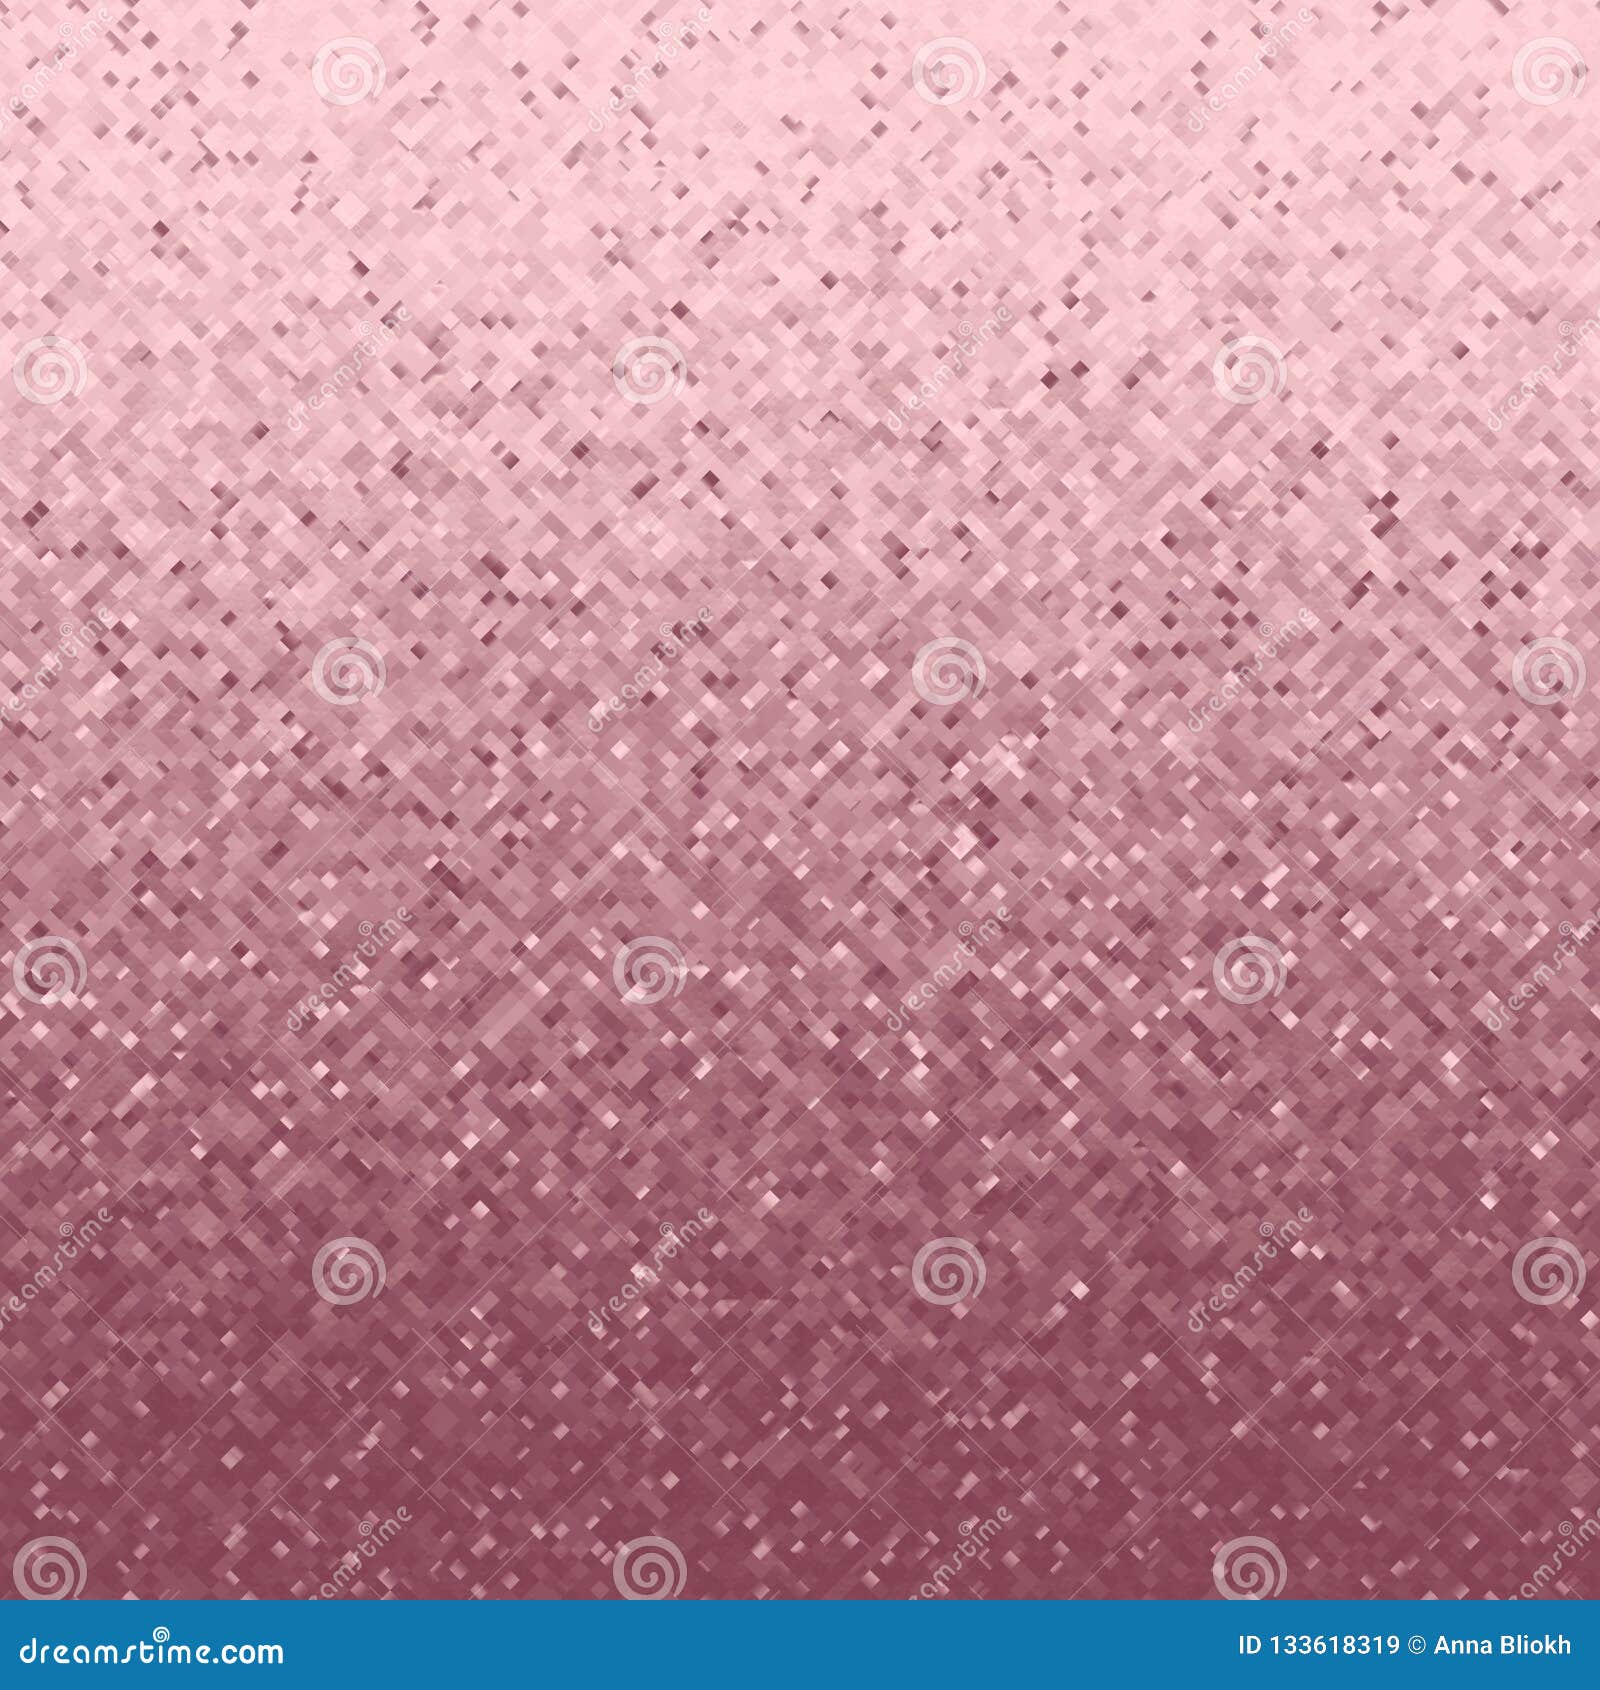 ombre millennial pink rose gold glittering background pixel texture